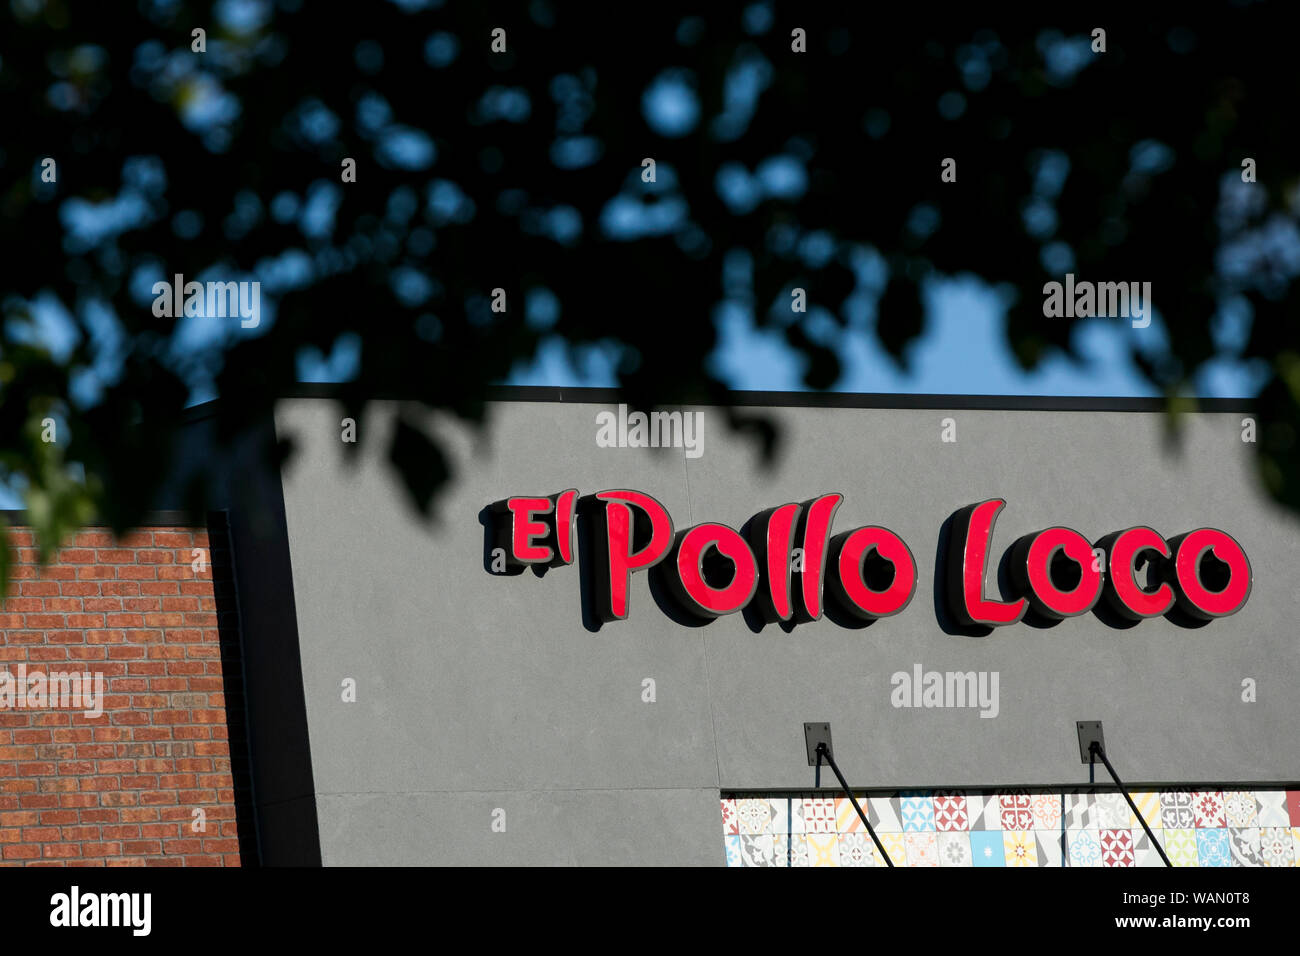 El pollo loco logo hi-res stock photography and images - Alamy